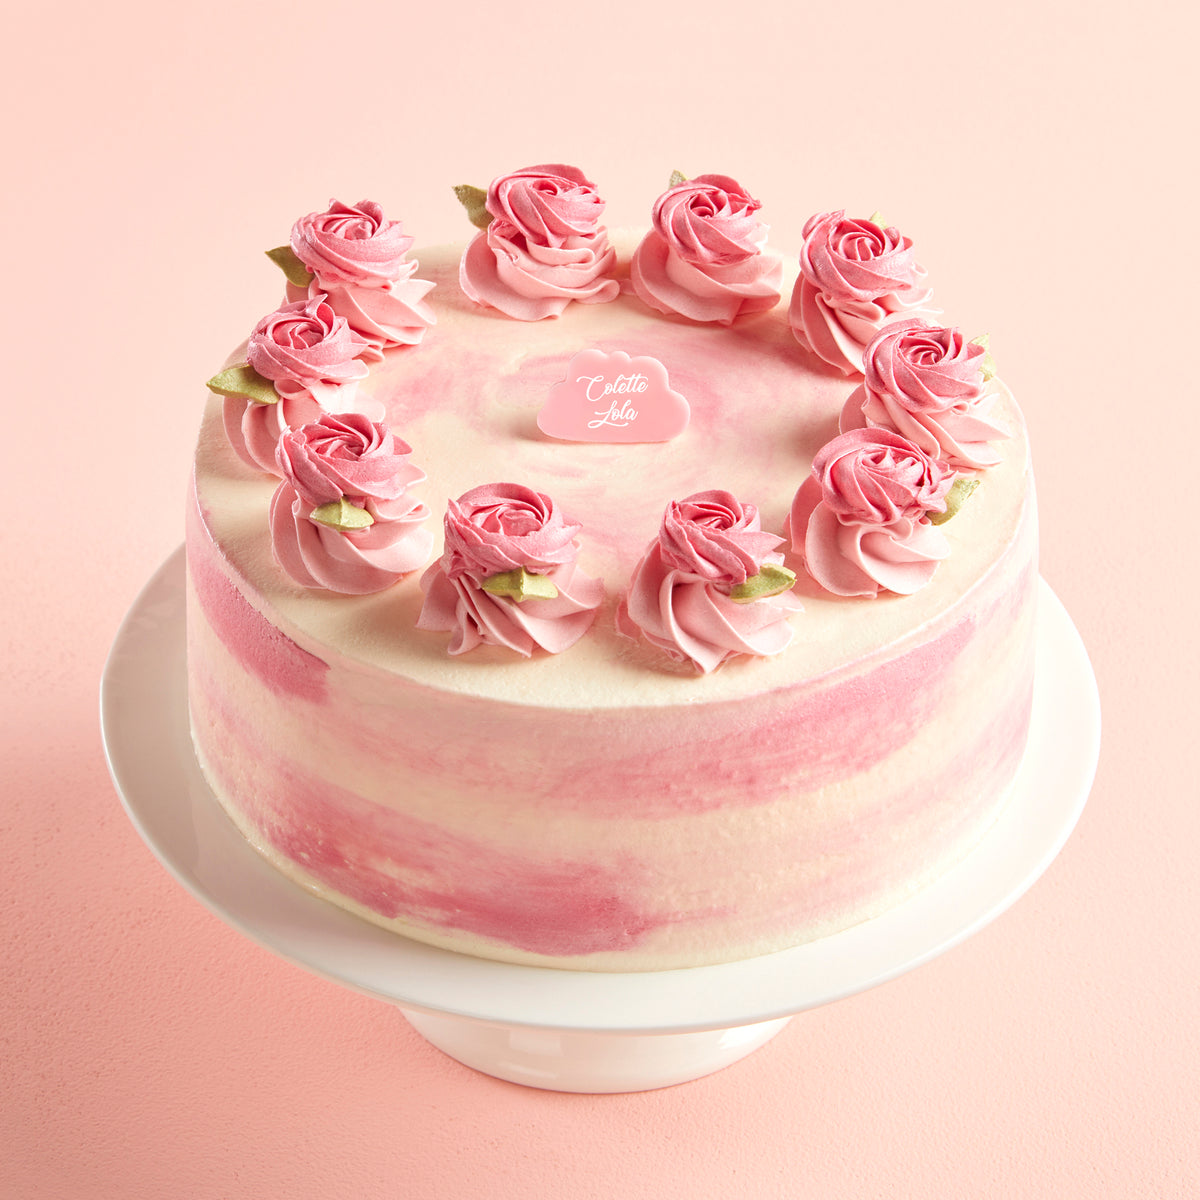 Happy Birthday Cake Topper  Colette & Lola Cake Shop – Colette Lola